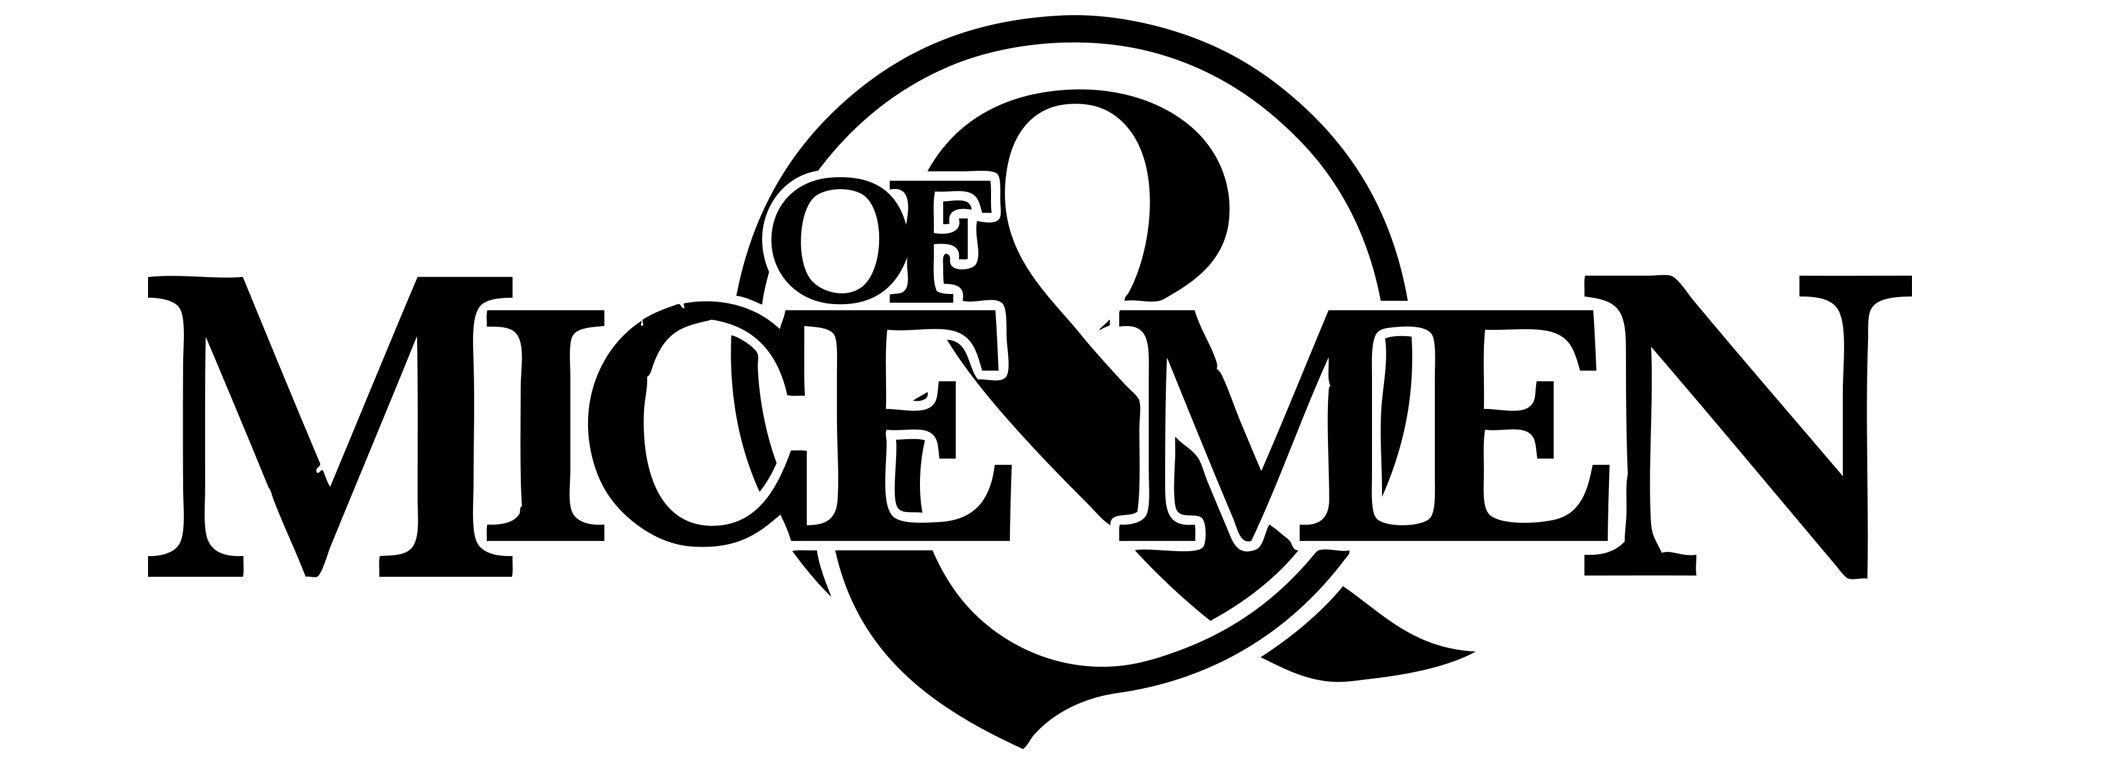 Of Mice and Men Logo - Of mice & men